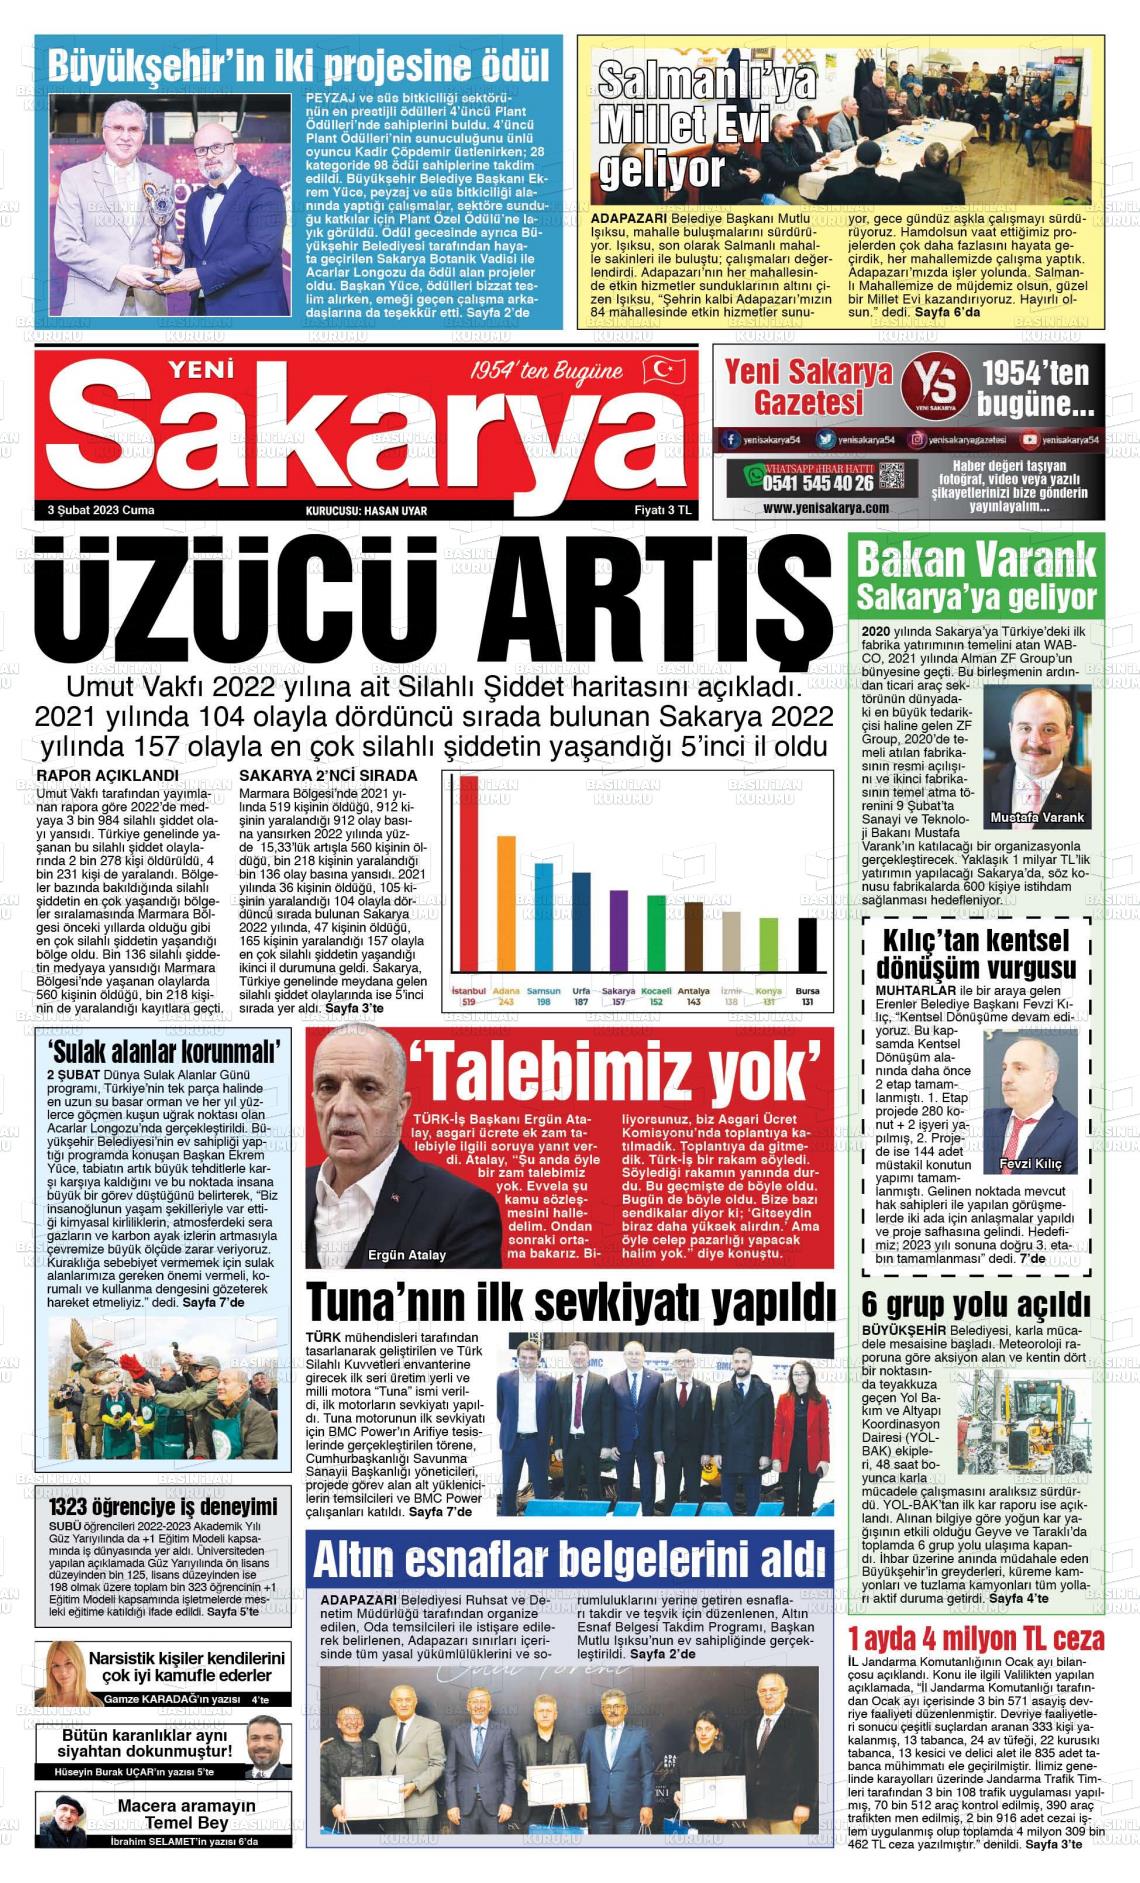 03 Şubat 2023 Yeni Sakarya Gazete Manşeti